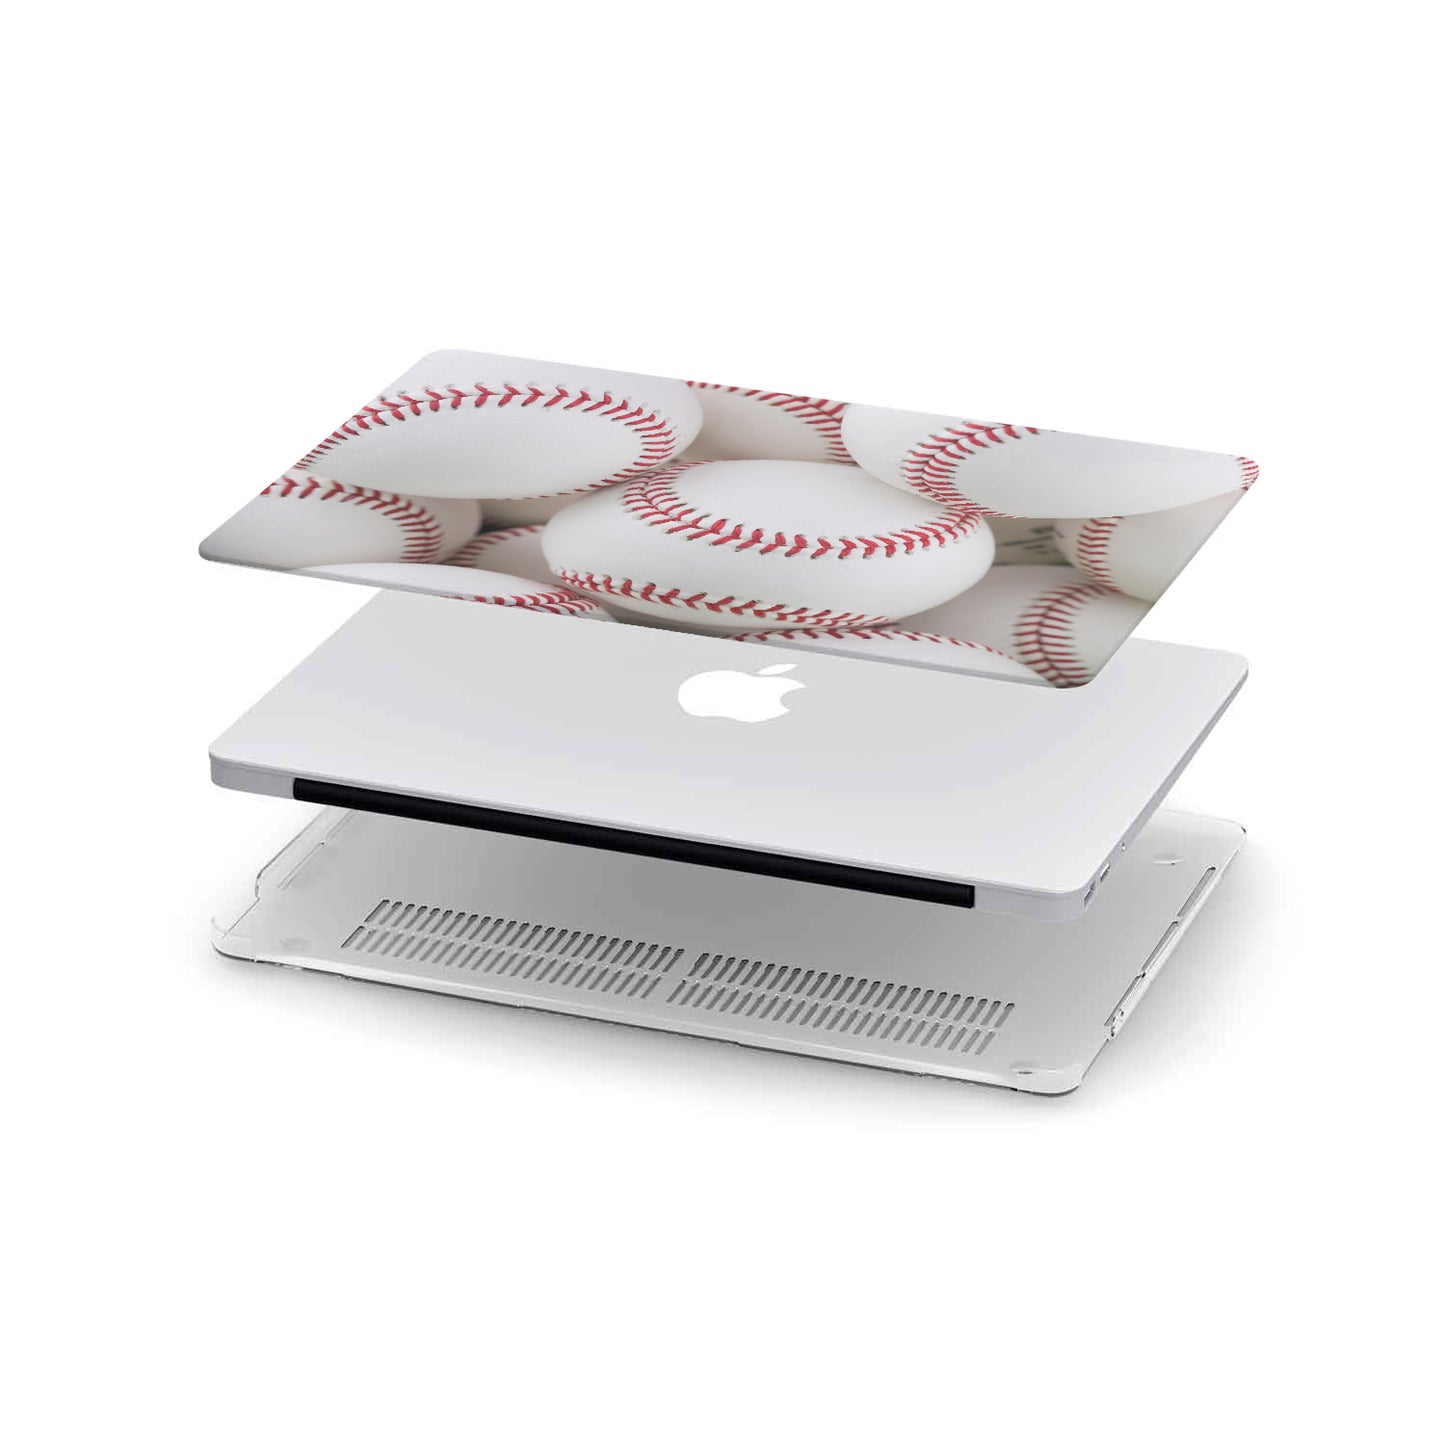 Macbook Hard Shell Case - Baseballs